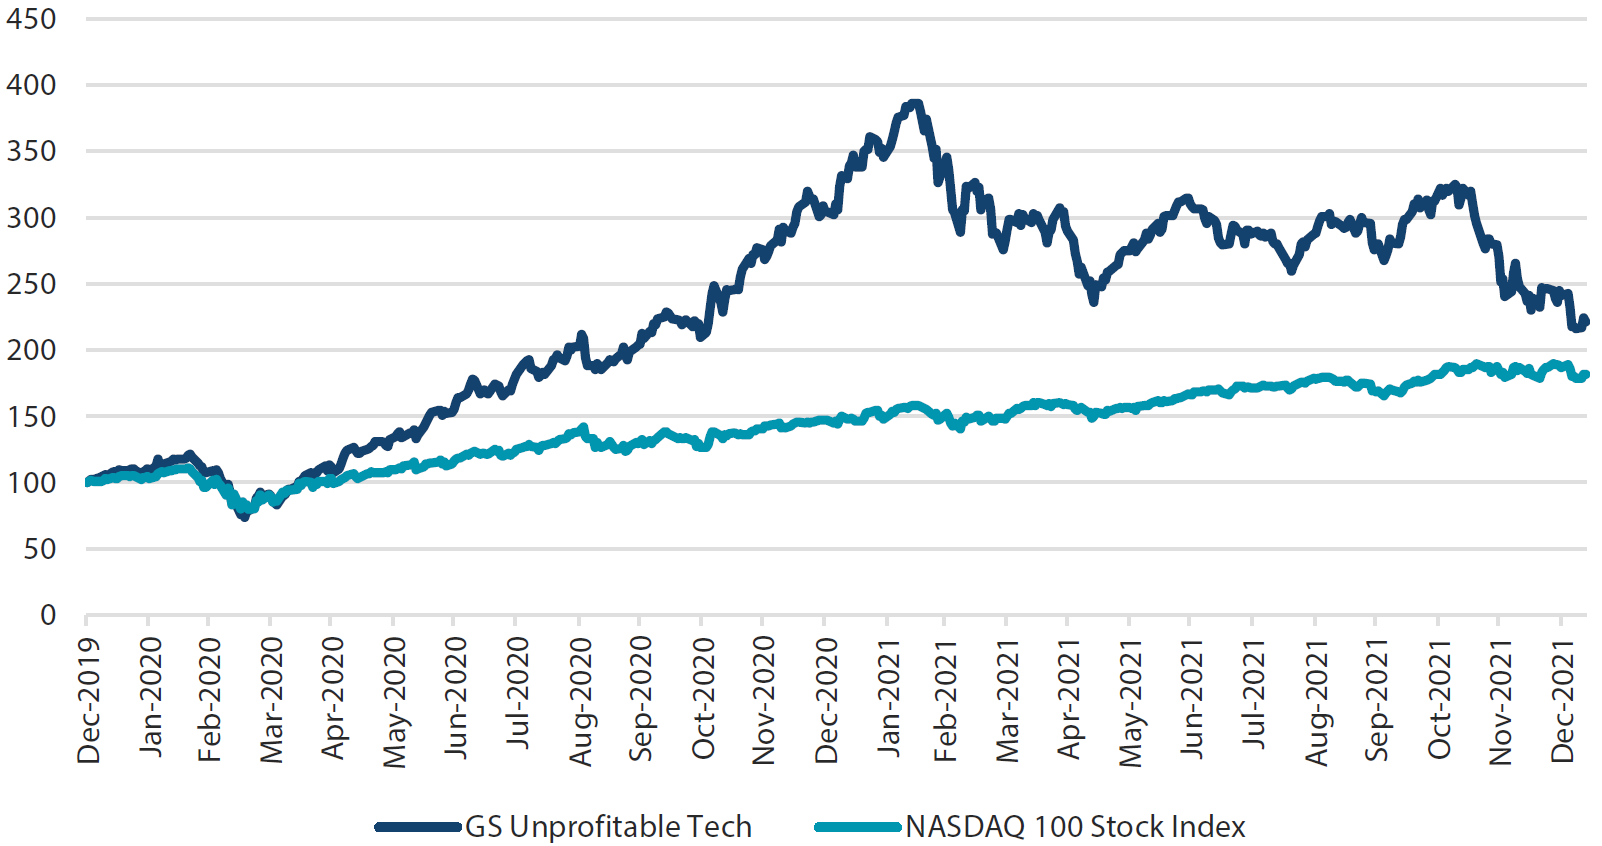 NASDAQ (Profitable) versus high growth unprofitable tech